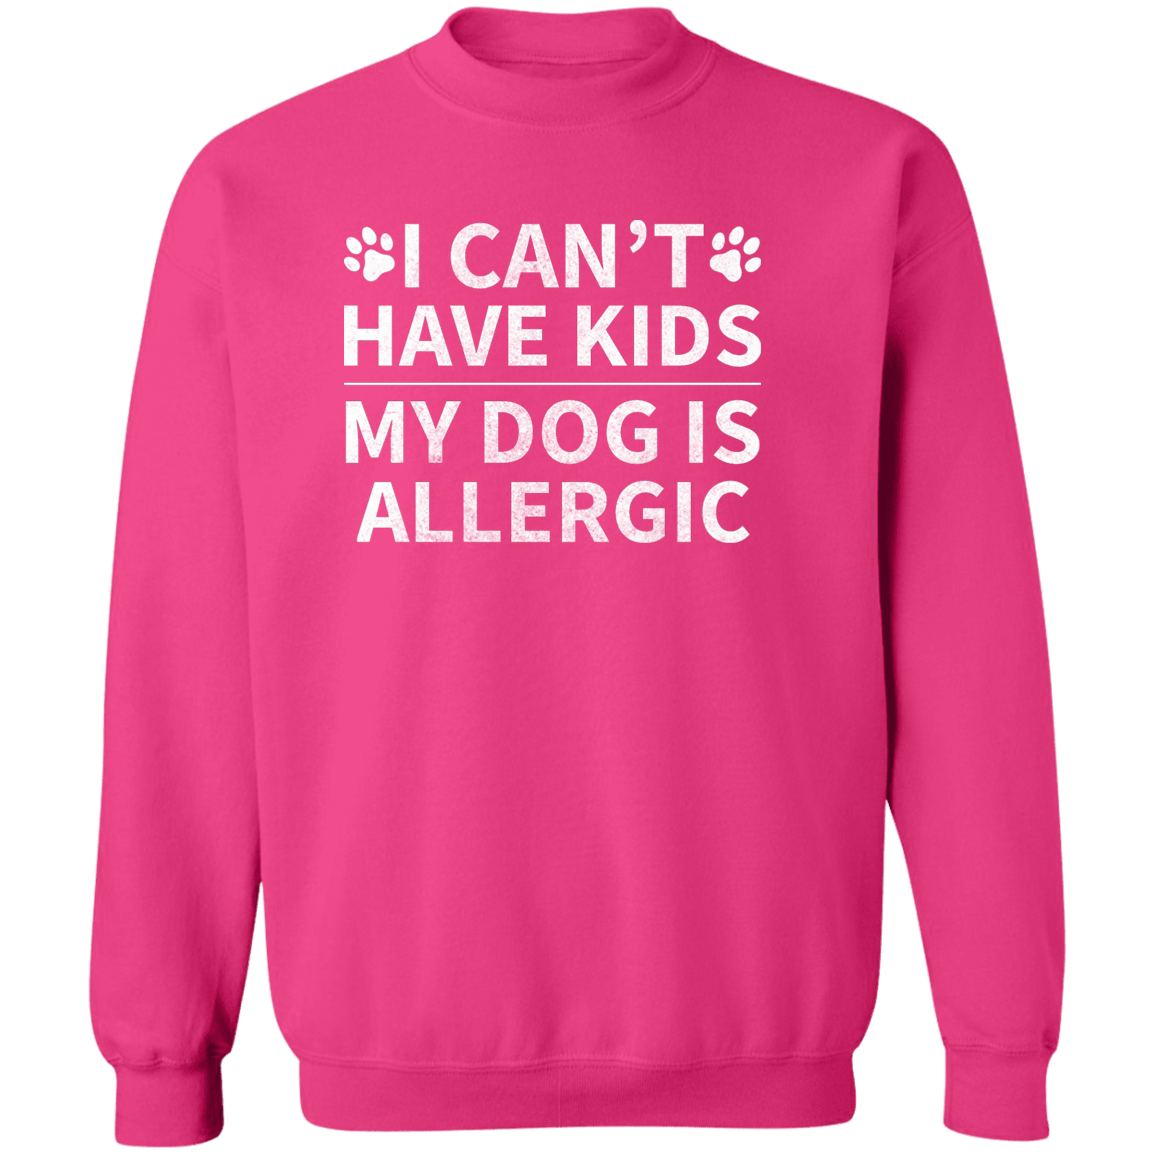 My Dog Is Allergic - Sweatshirt.